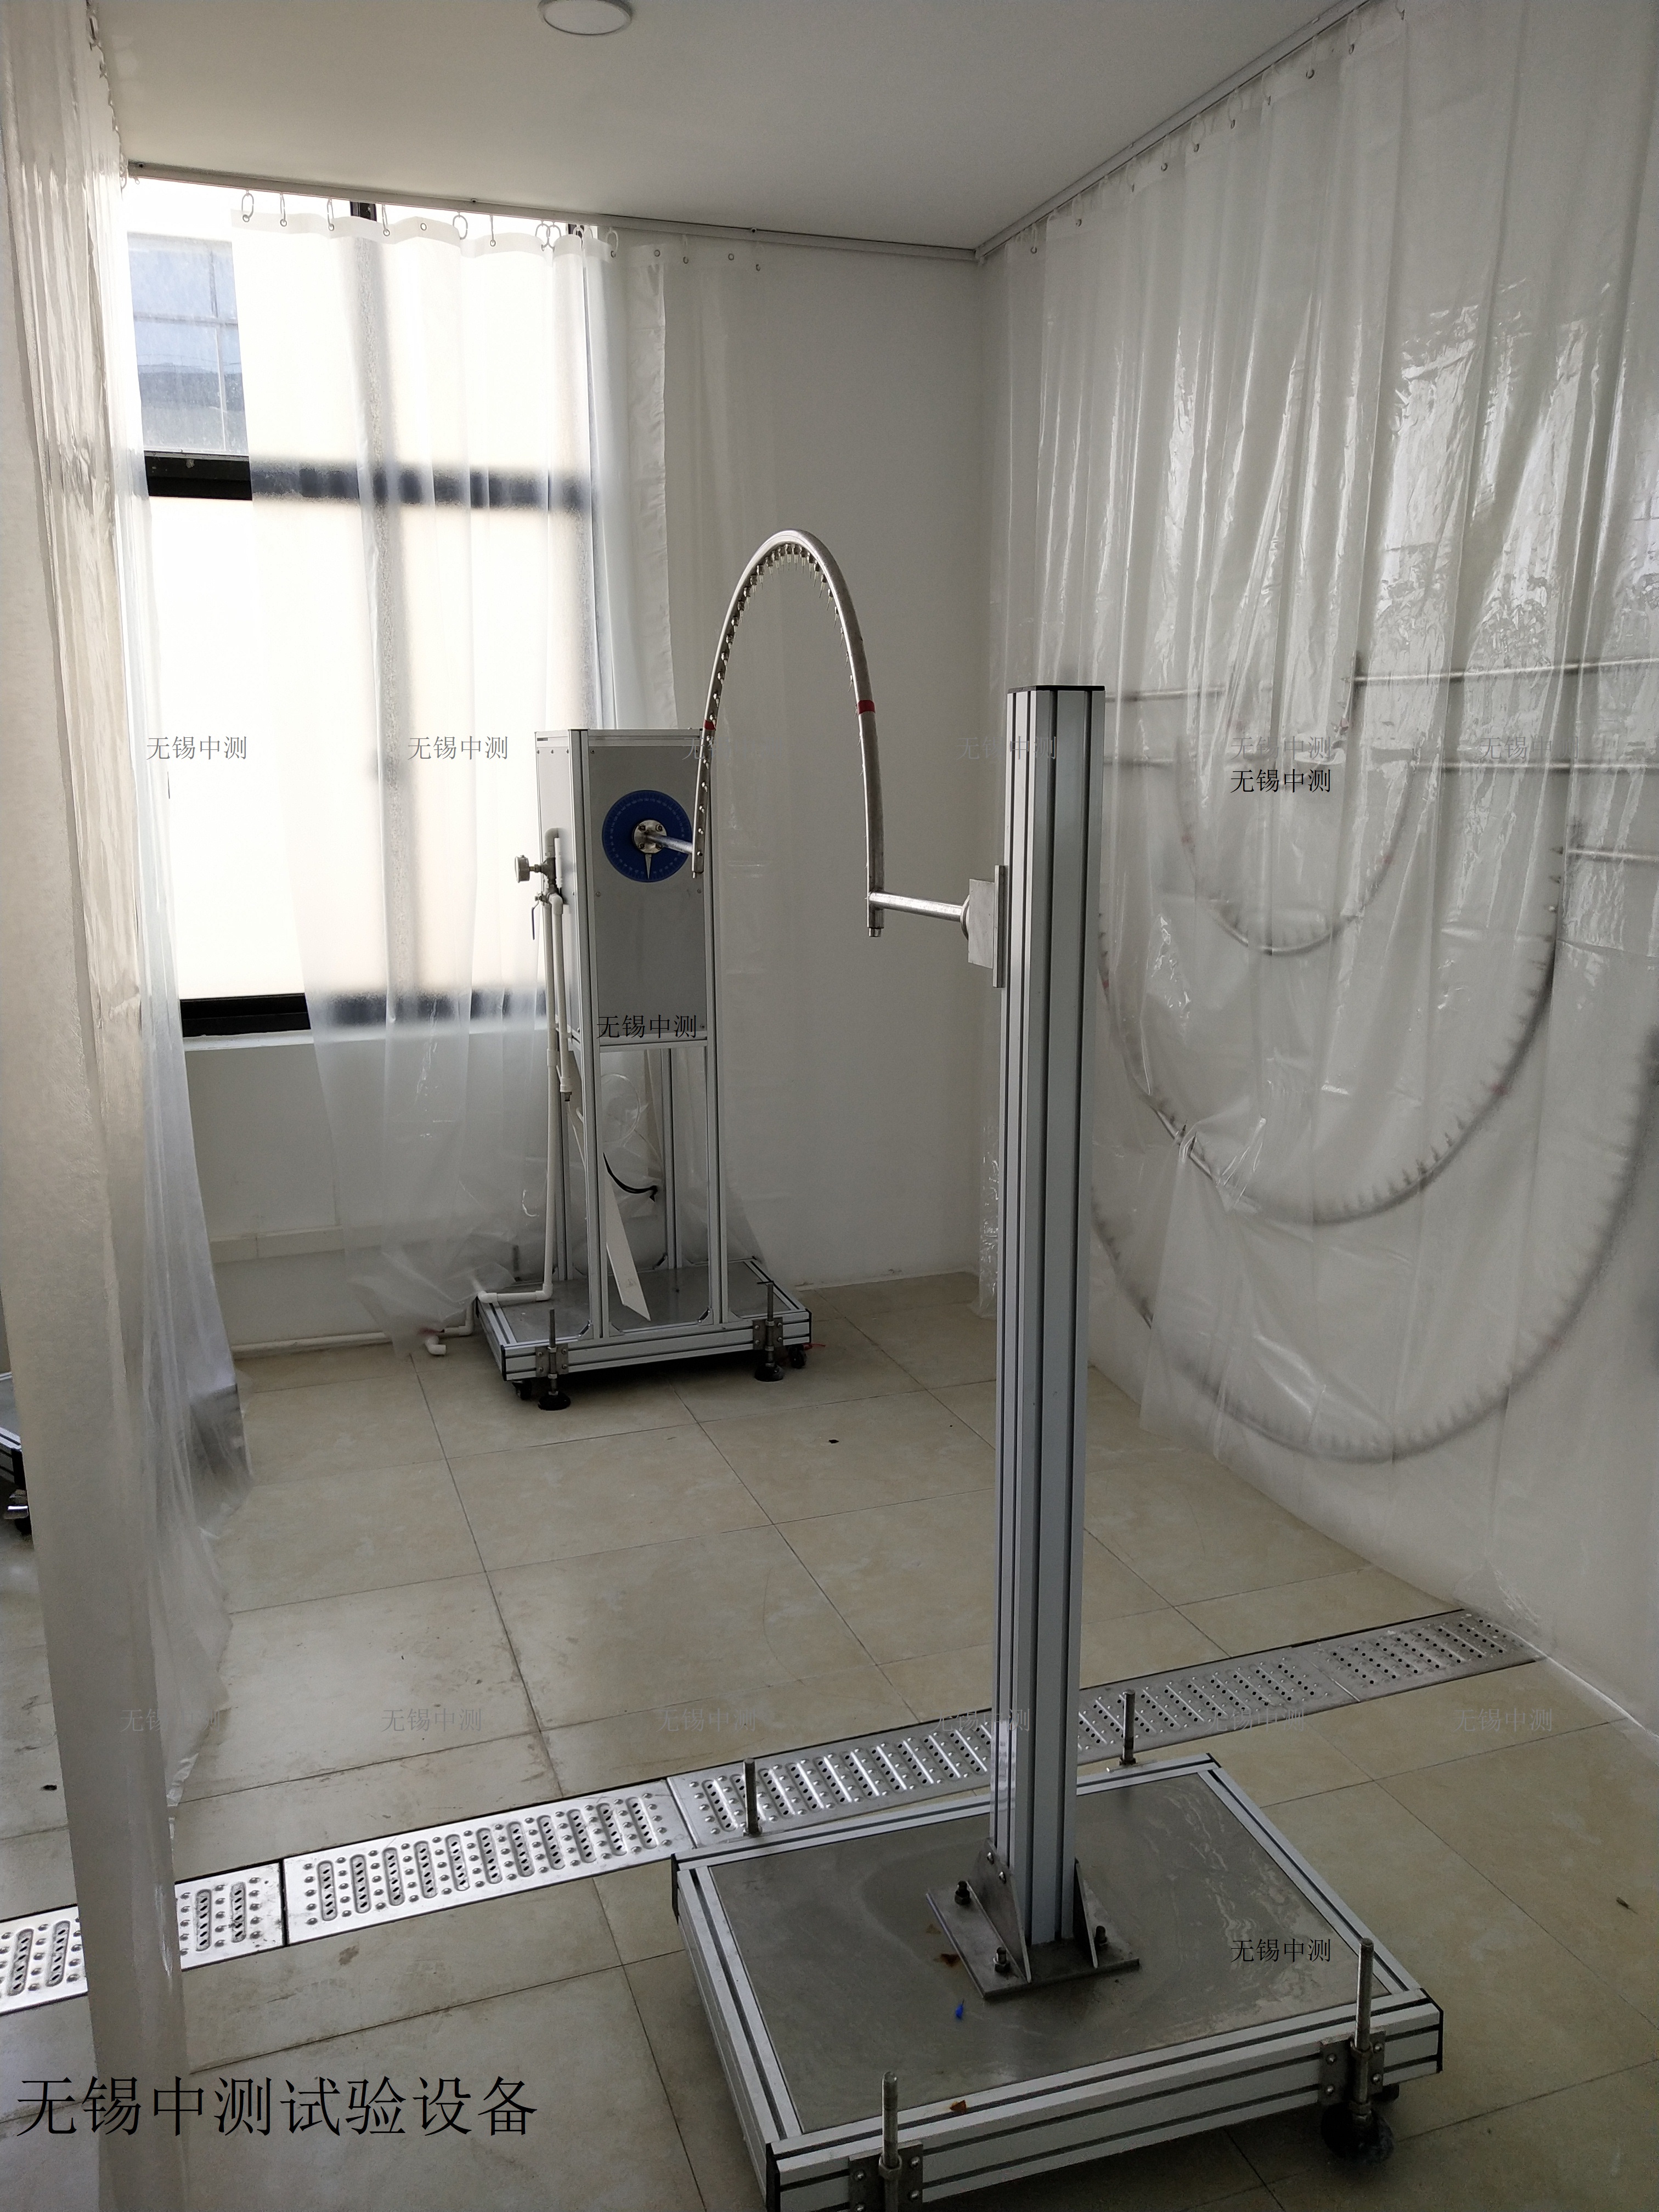 IP防水实验室设备 中测IPX6防水试验机涡流流量计实时监测IP淋雨试验机可含cnas校准证书